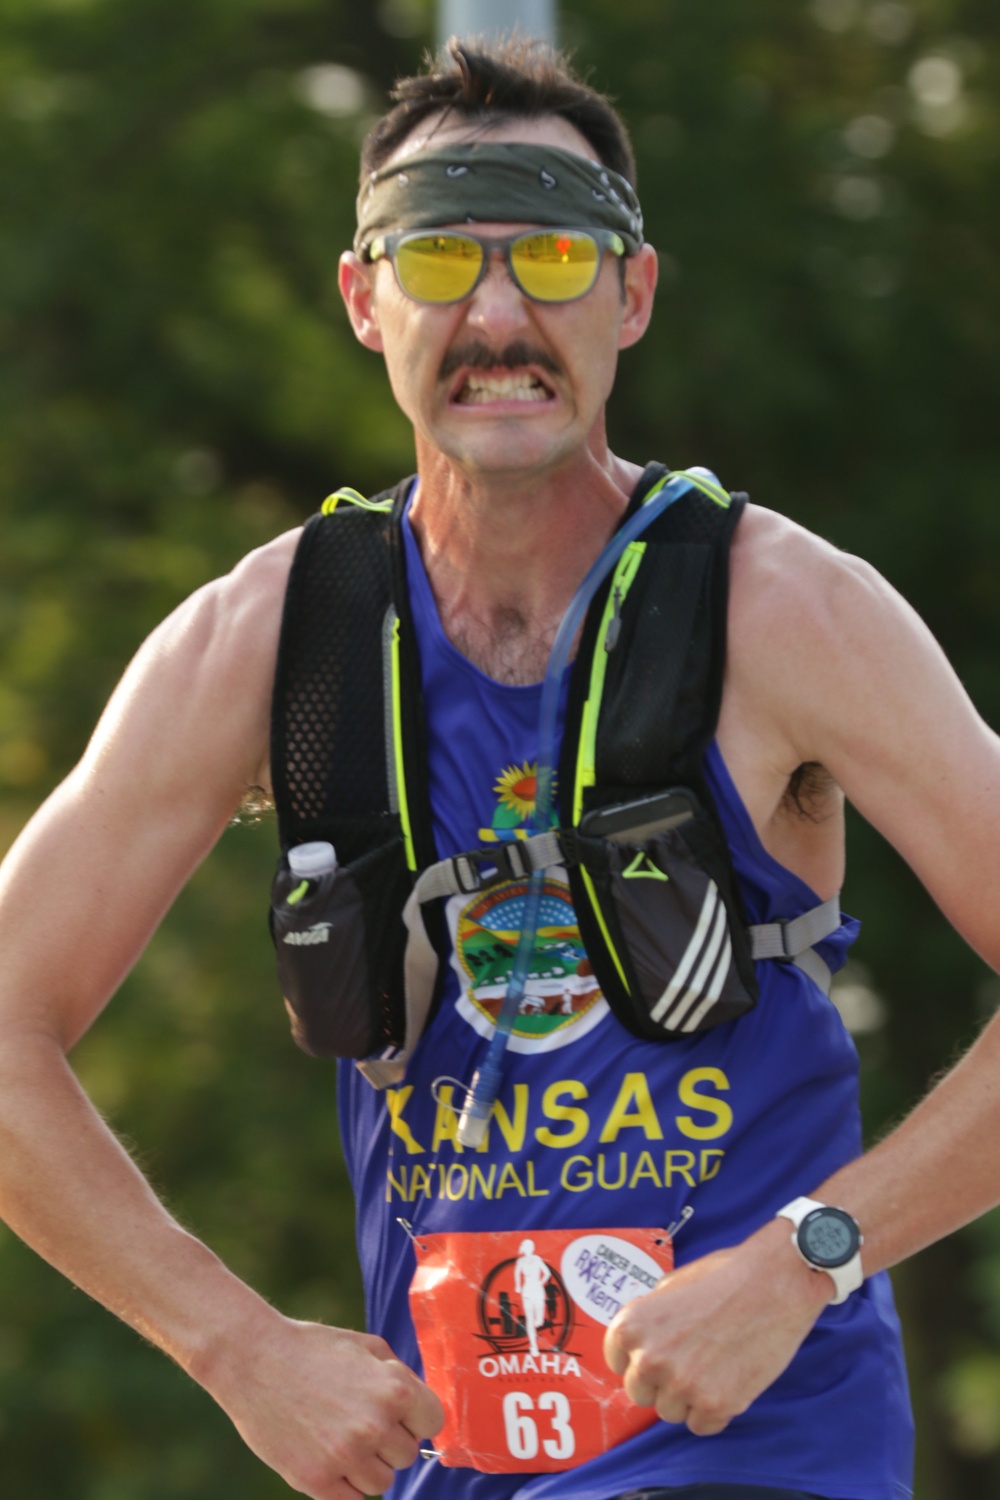 Guardsmen represent Kansas at Omaha Marathon